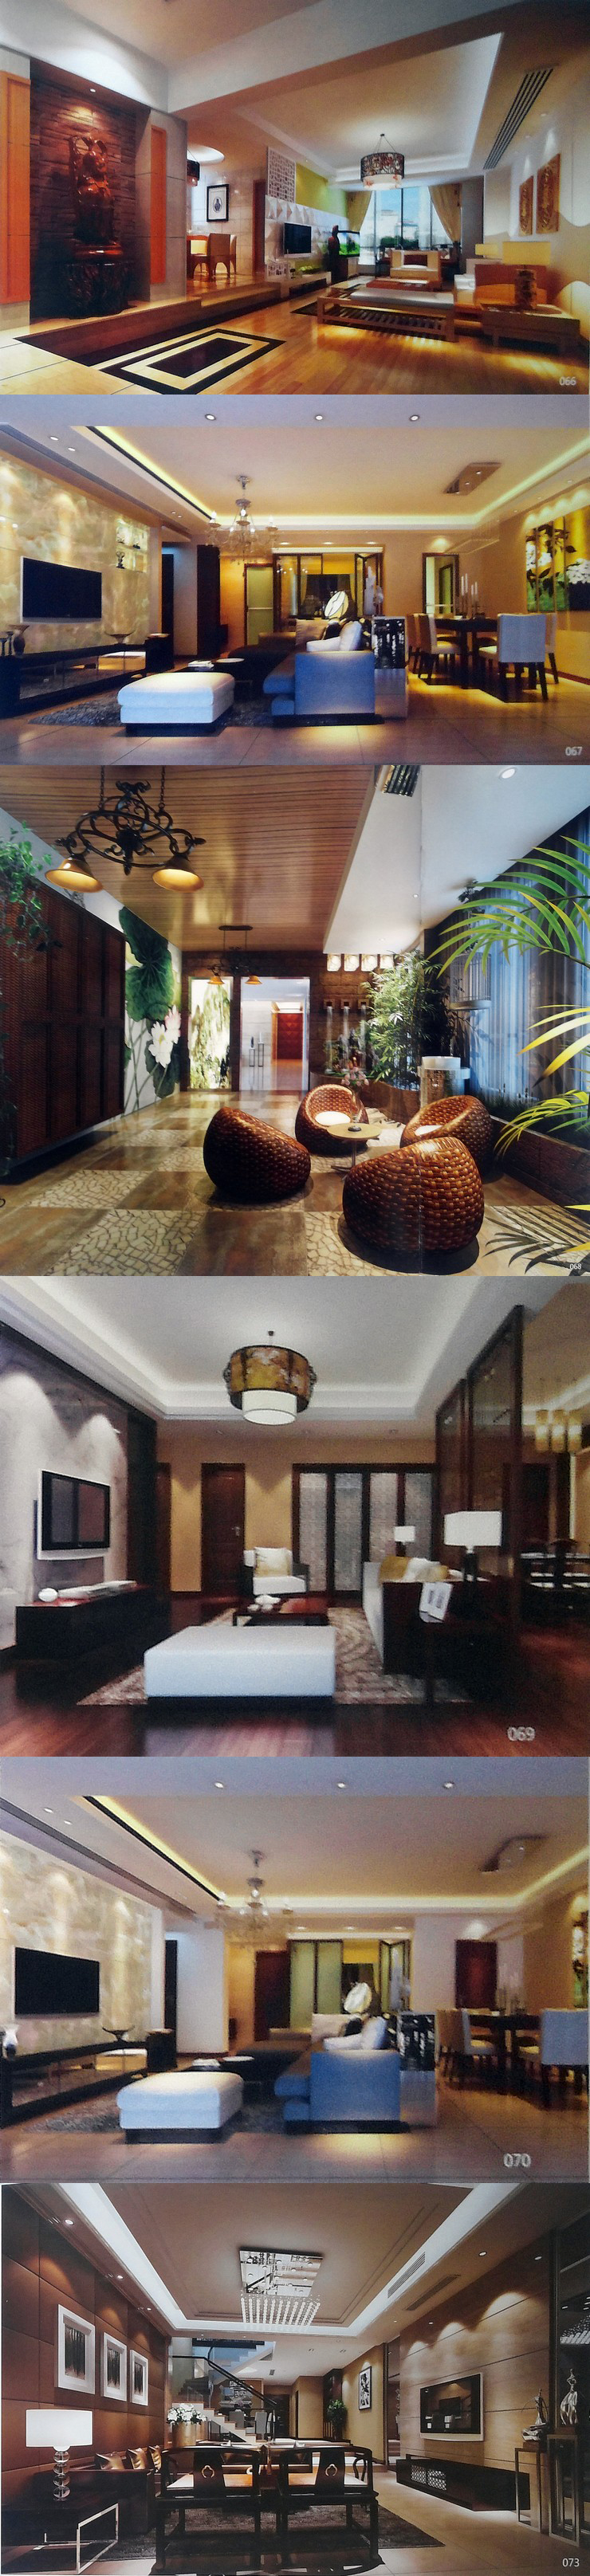 Living-room interior design 3ds max model 2014